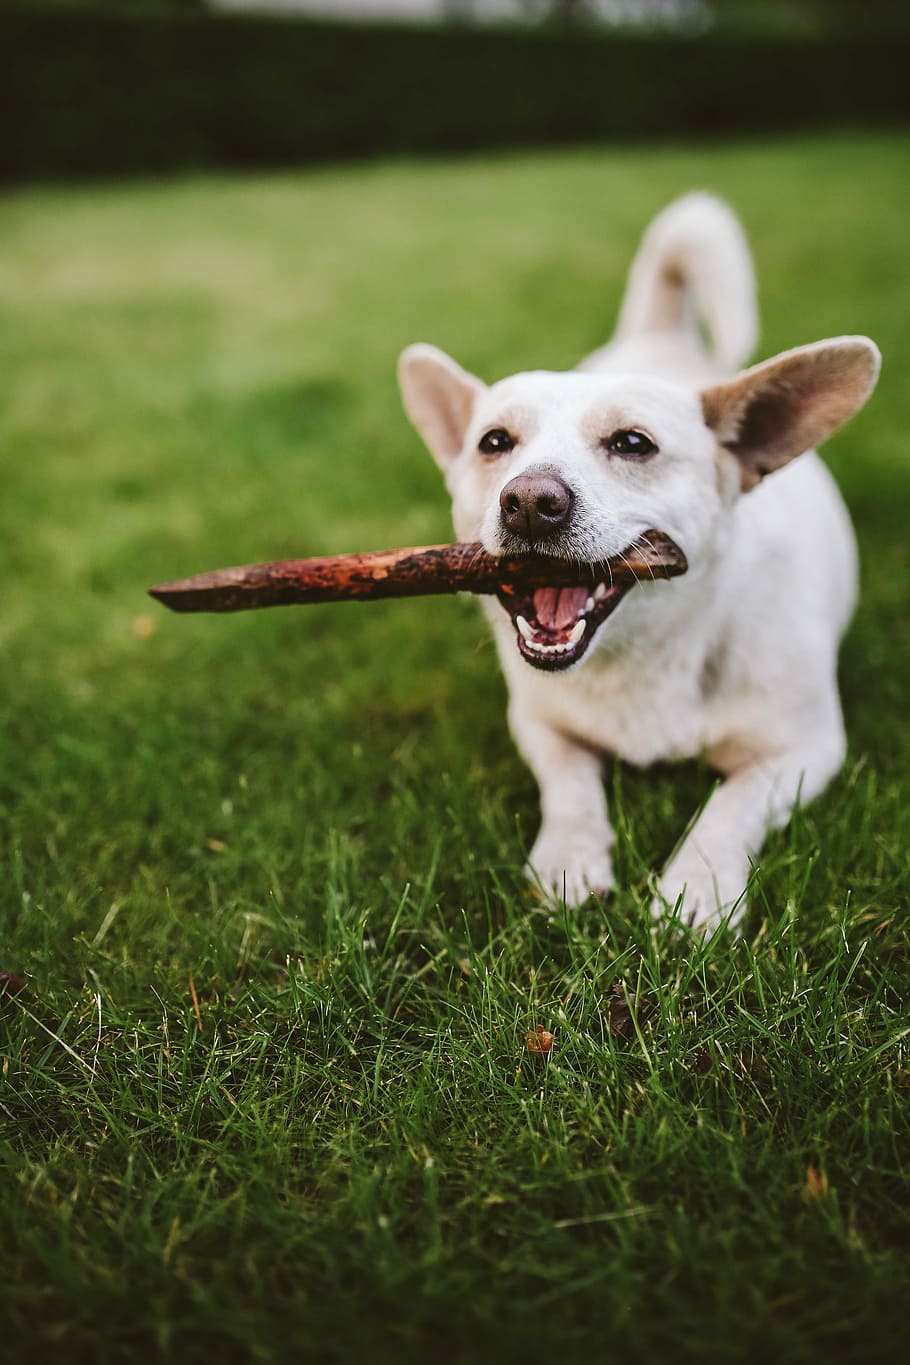 Dog playing with stick, pet, animal, fun, happy, white dog, pets